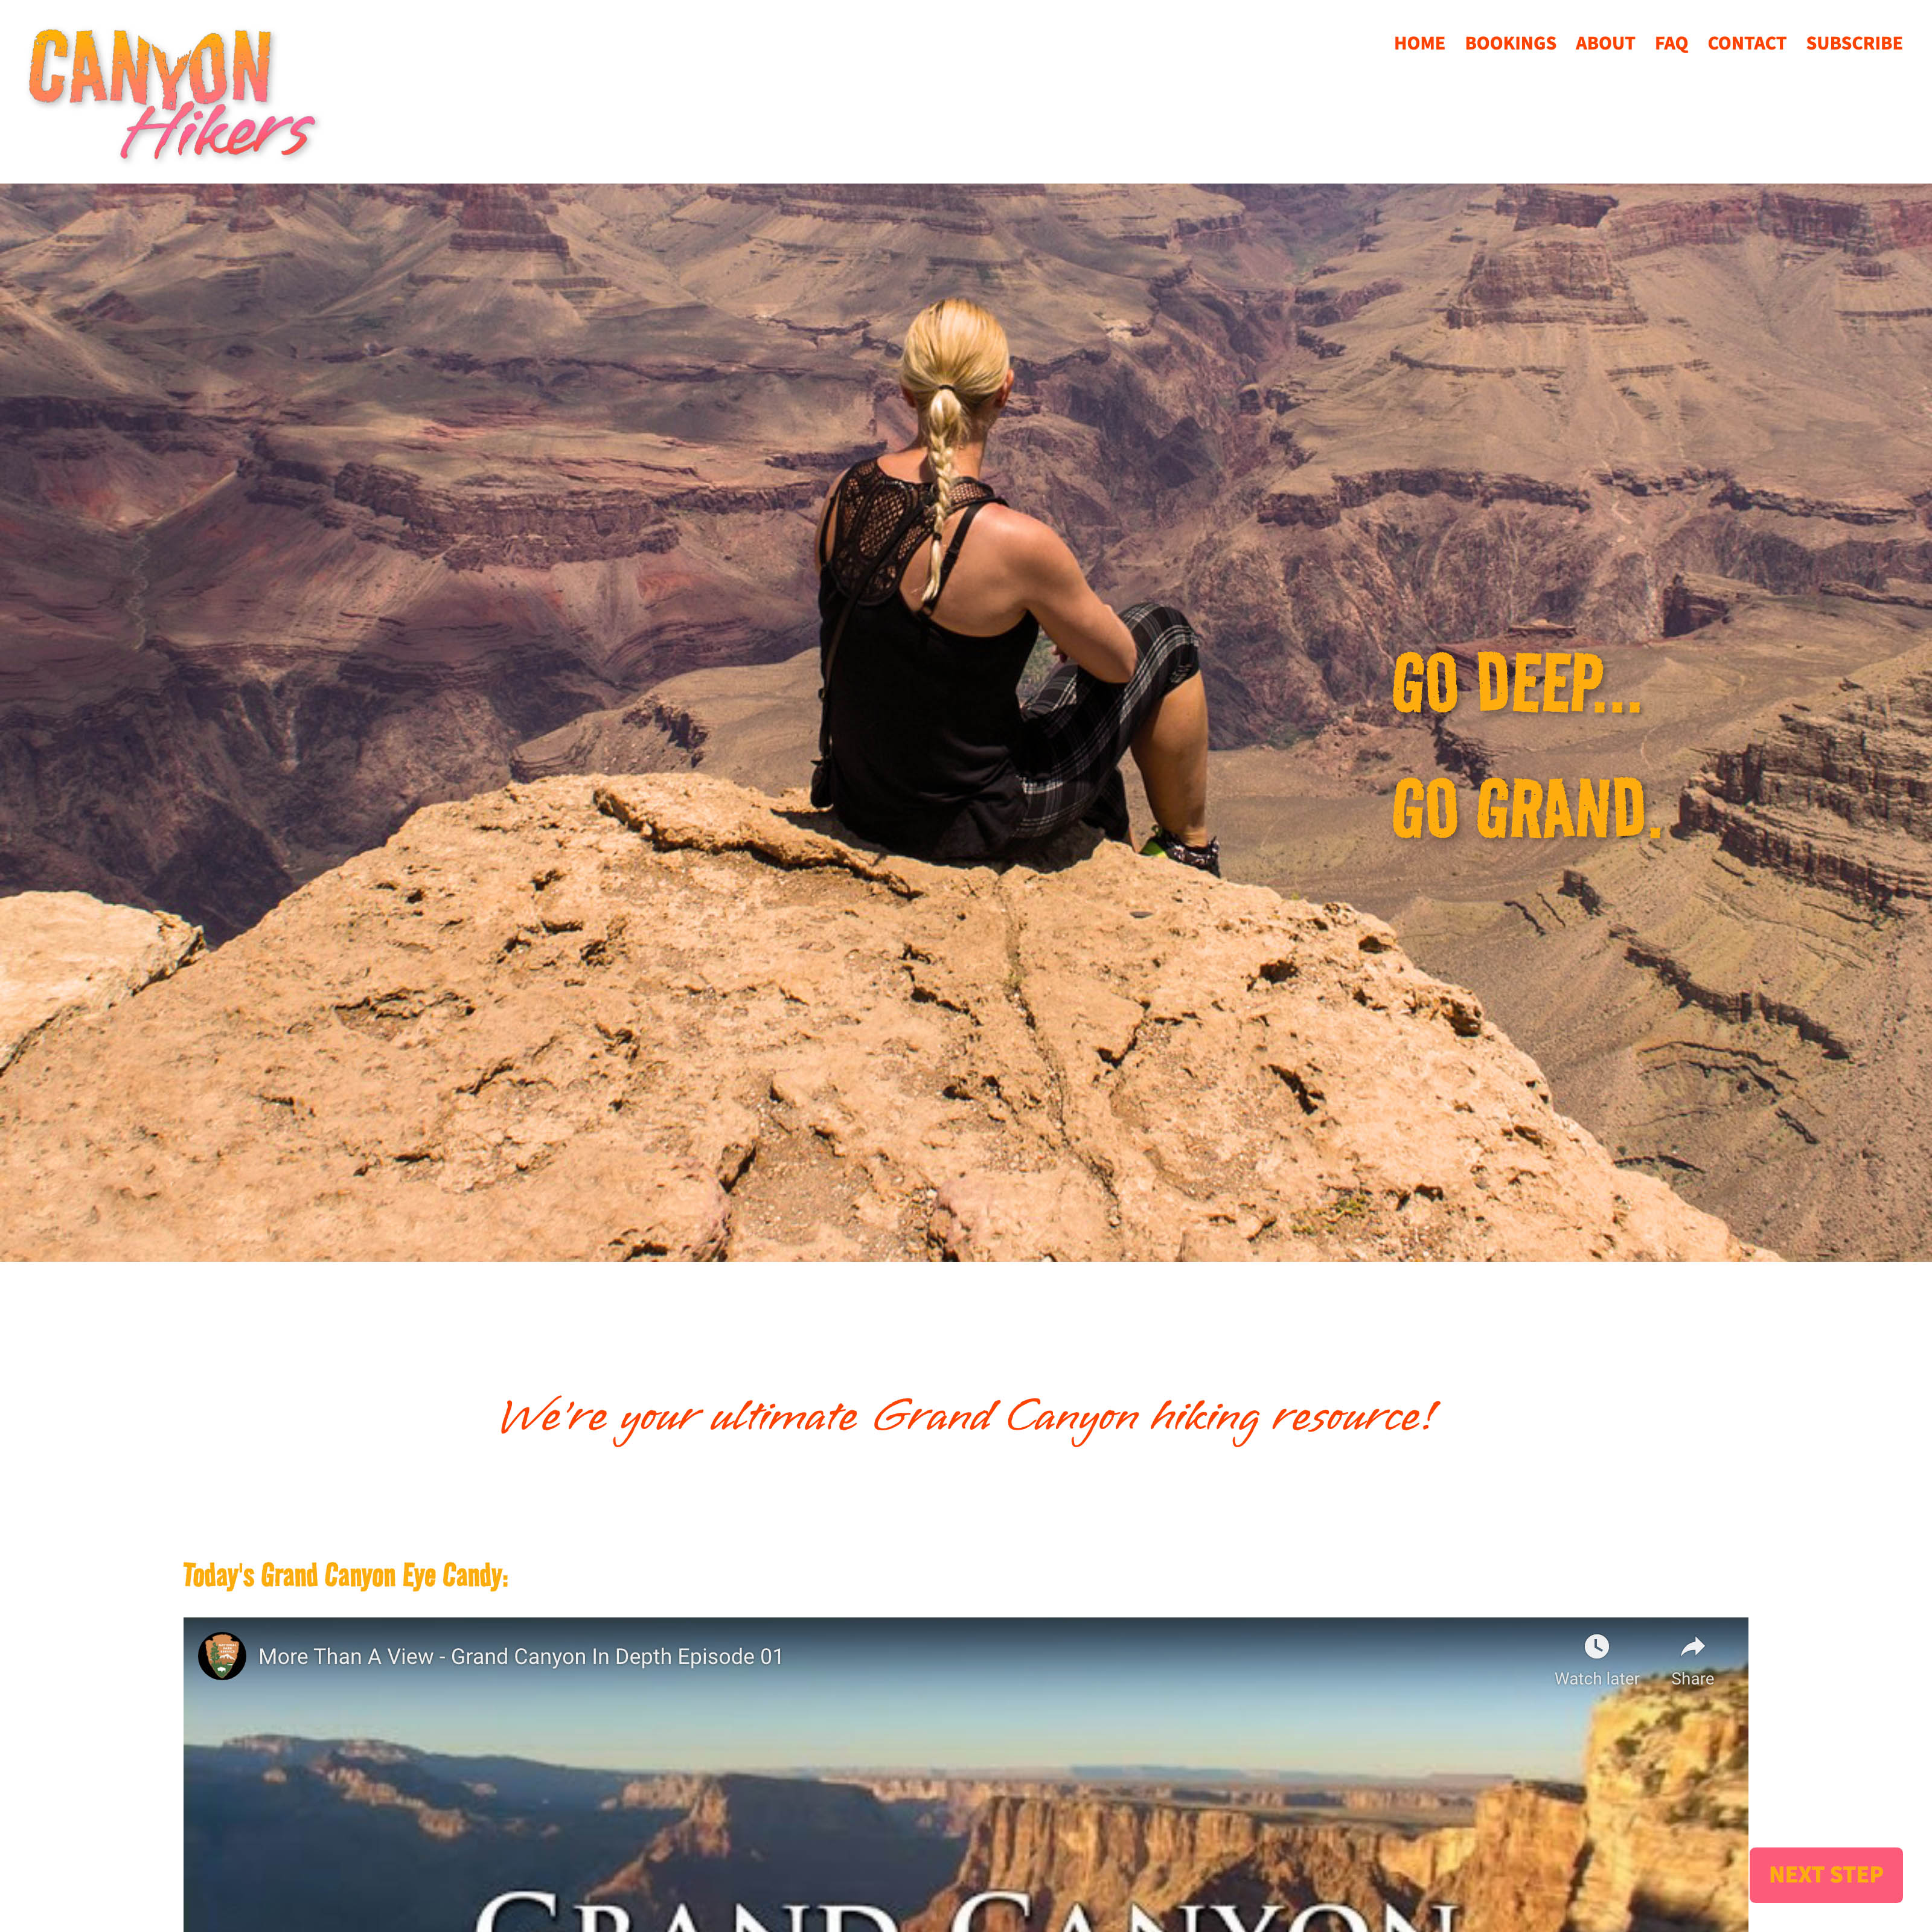 Hiking Tour Company Landing Page